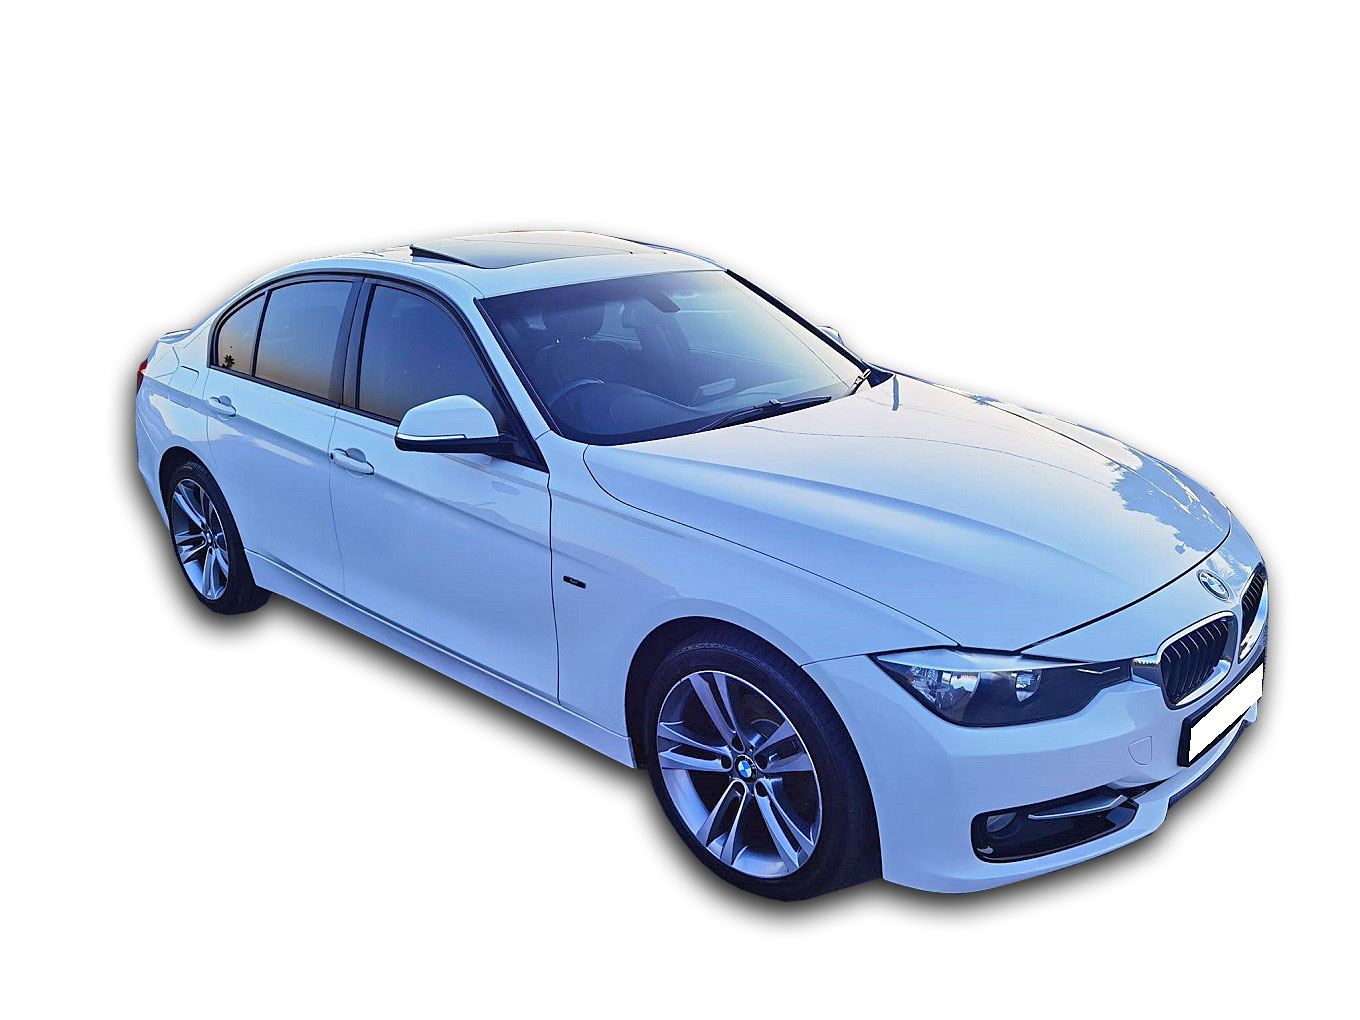 Used BMW 3 Series 320I Sport F30 2012 on auction - MC2306260032